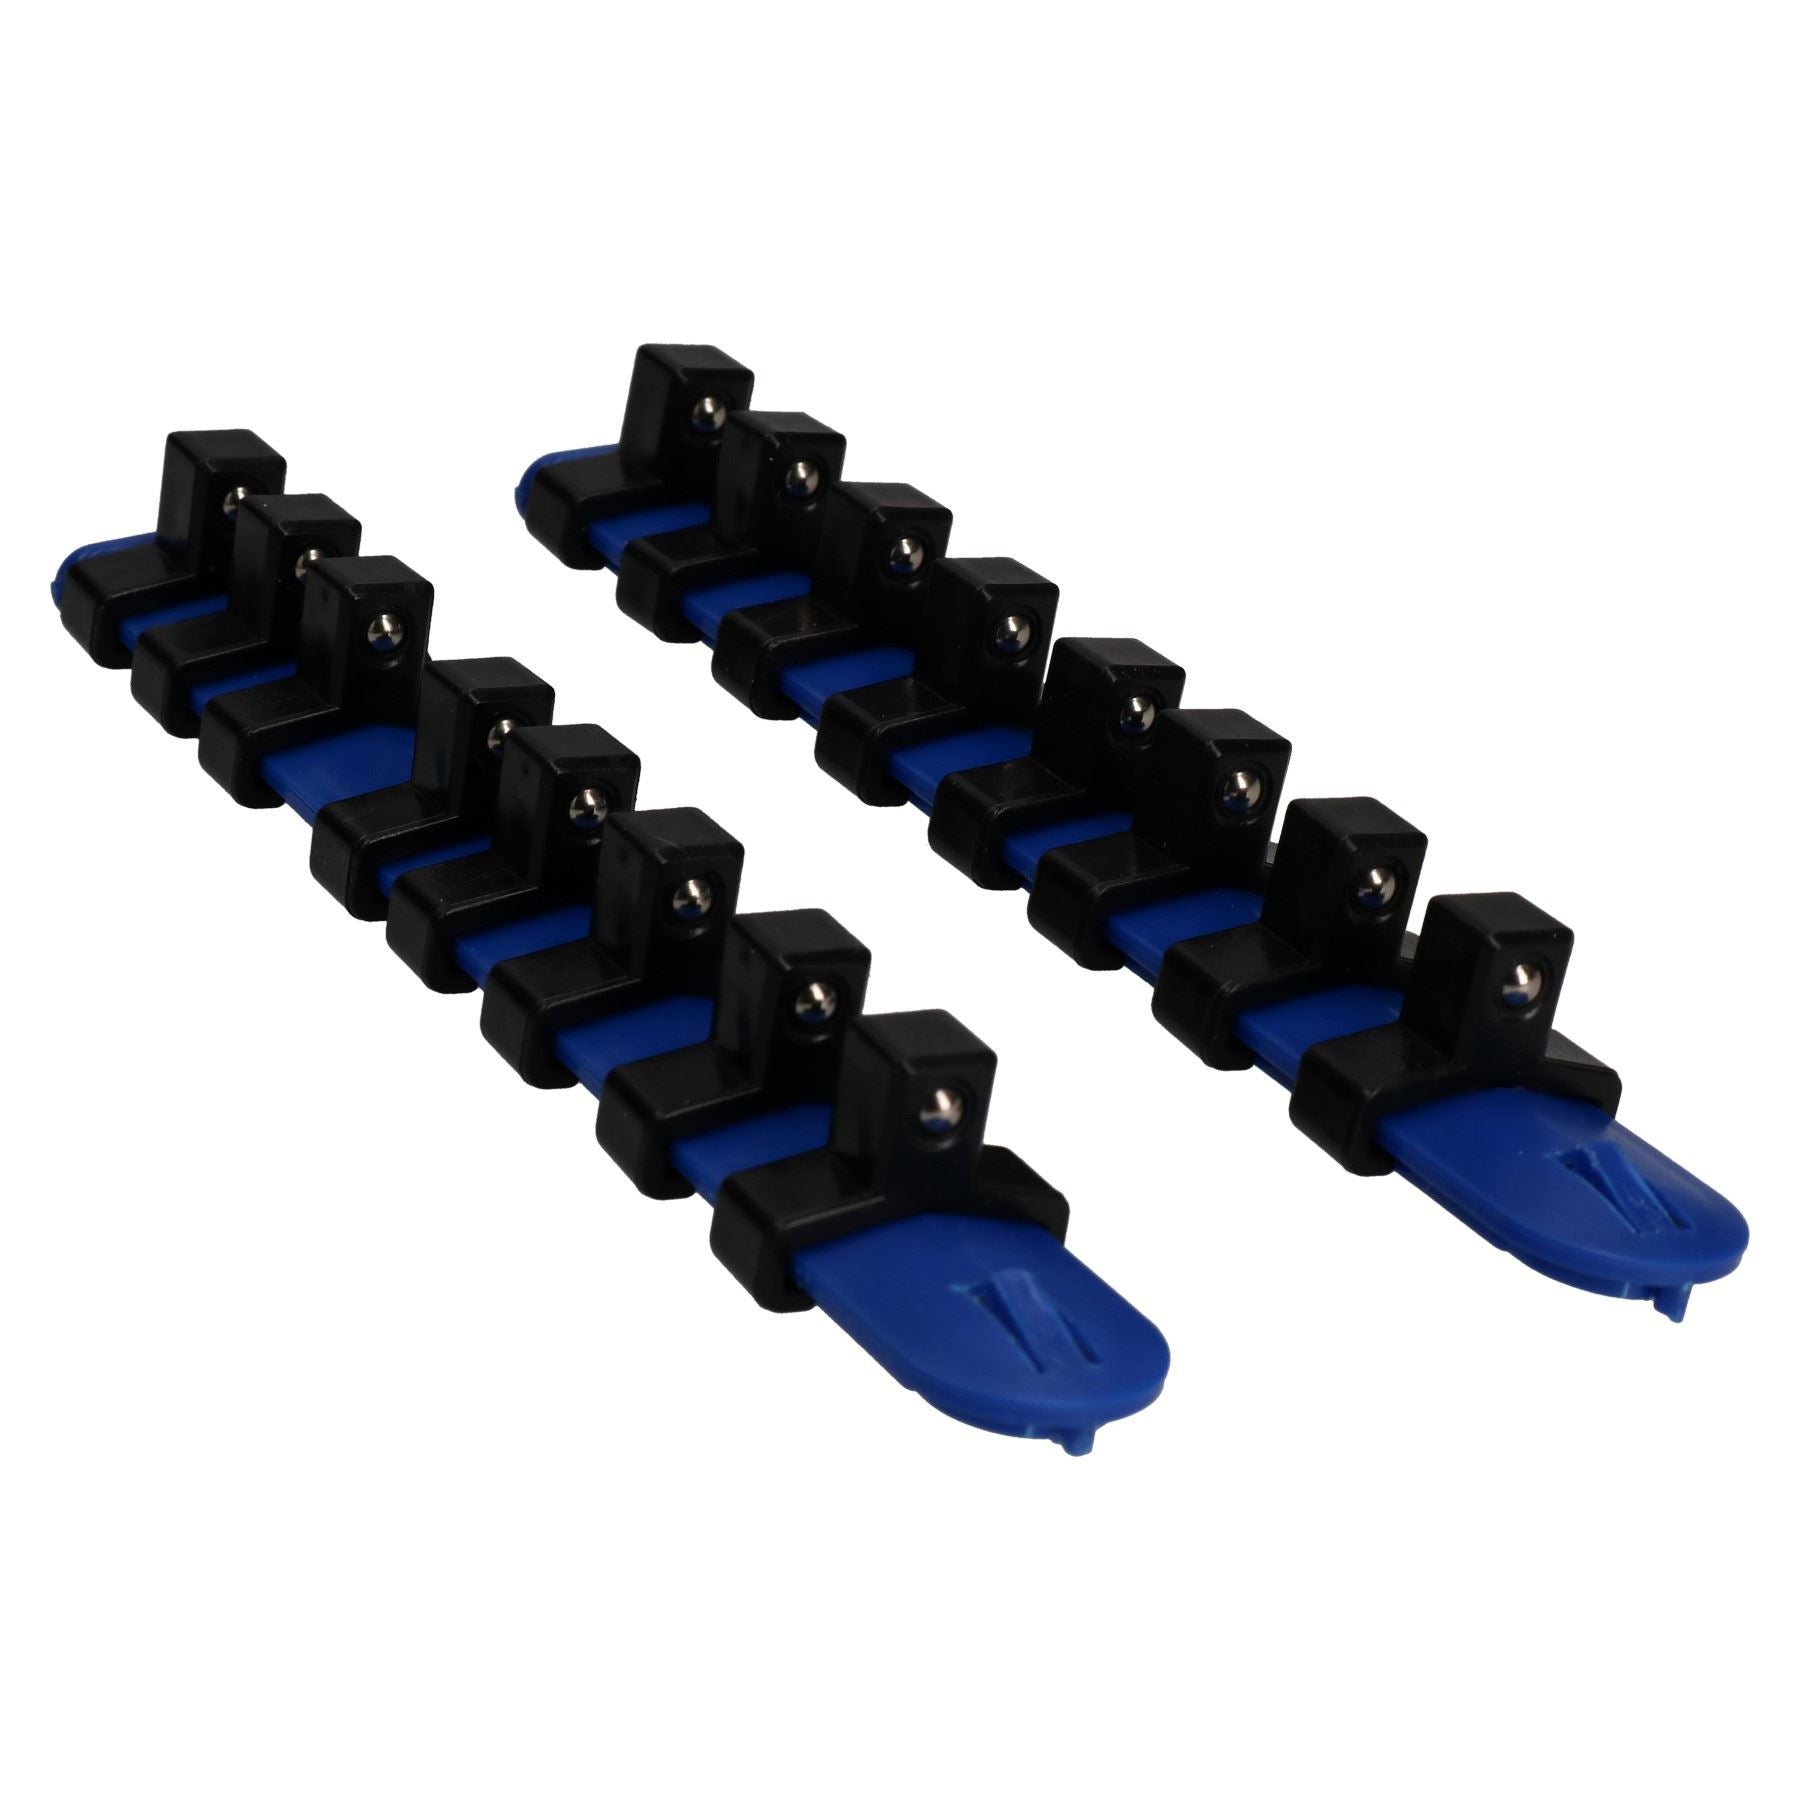 2pc Socket Storage Holder Organiser Plastic Rails 3/8" Drive Sockets 16 Clips